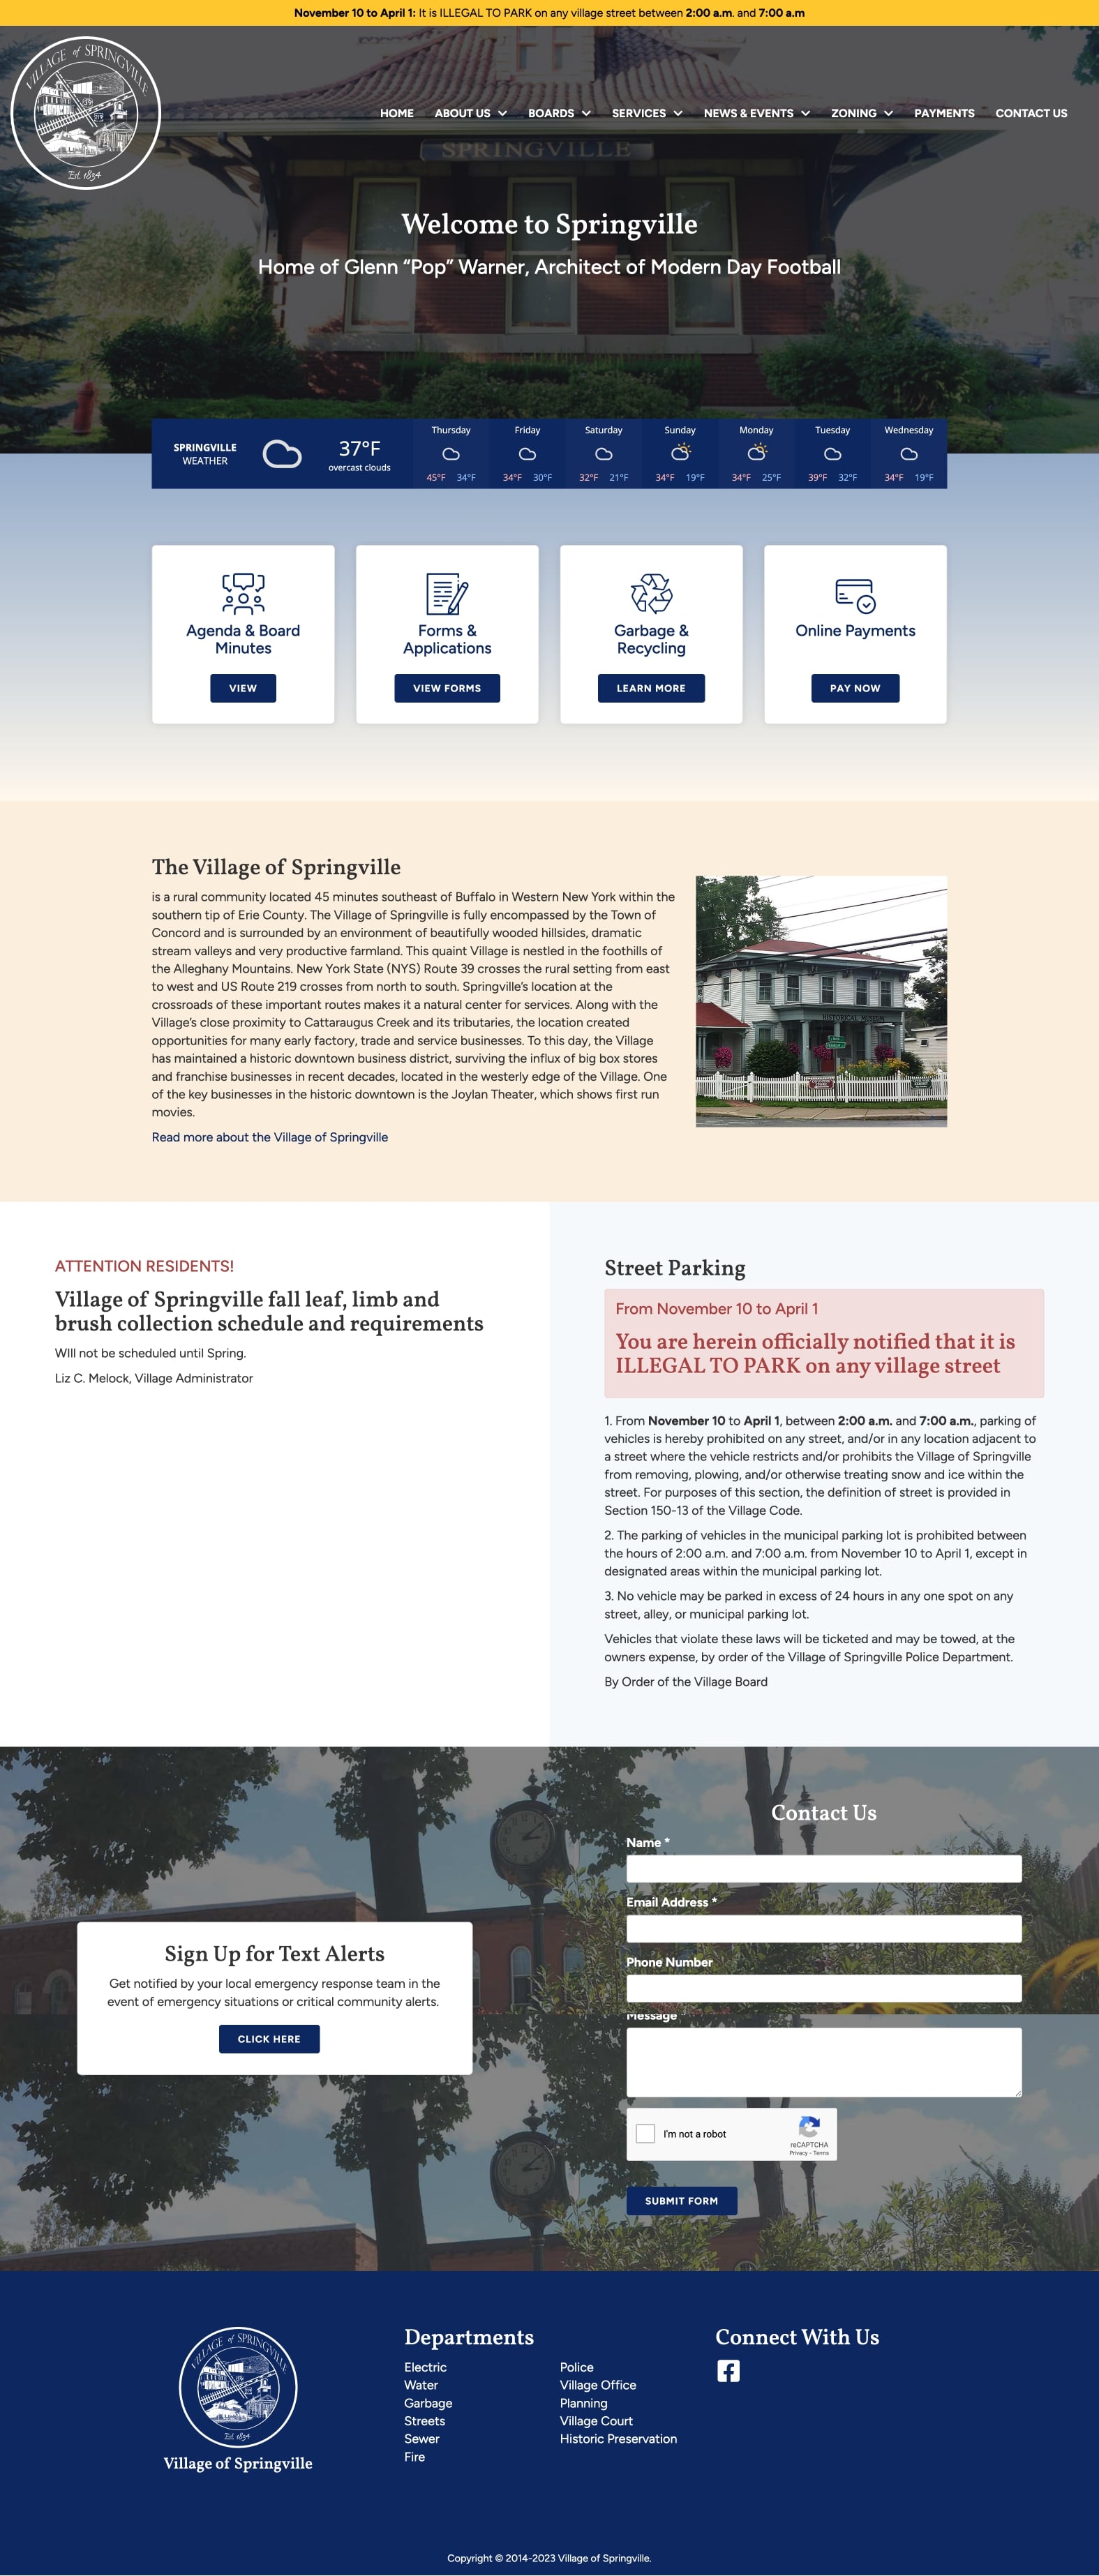 Village of Springville Website - Desktop